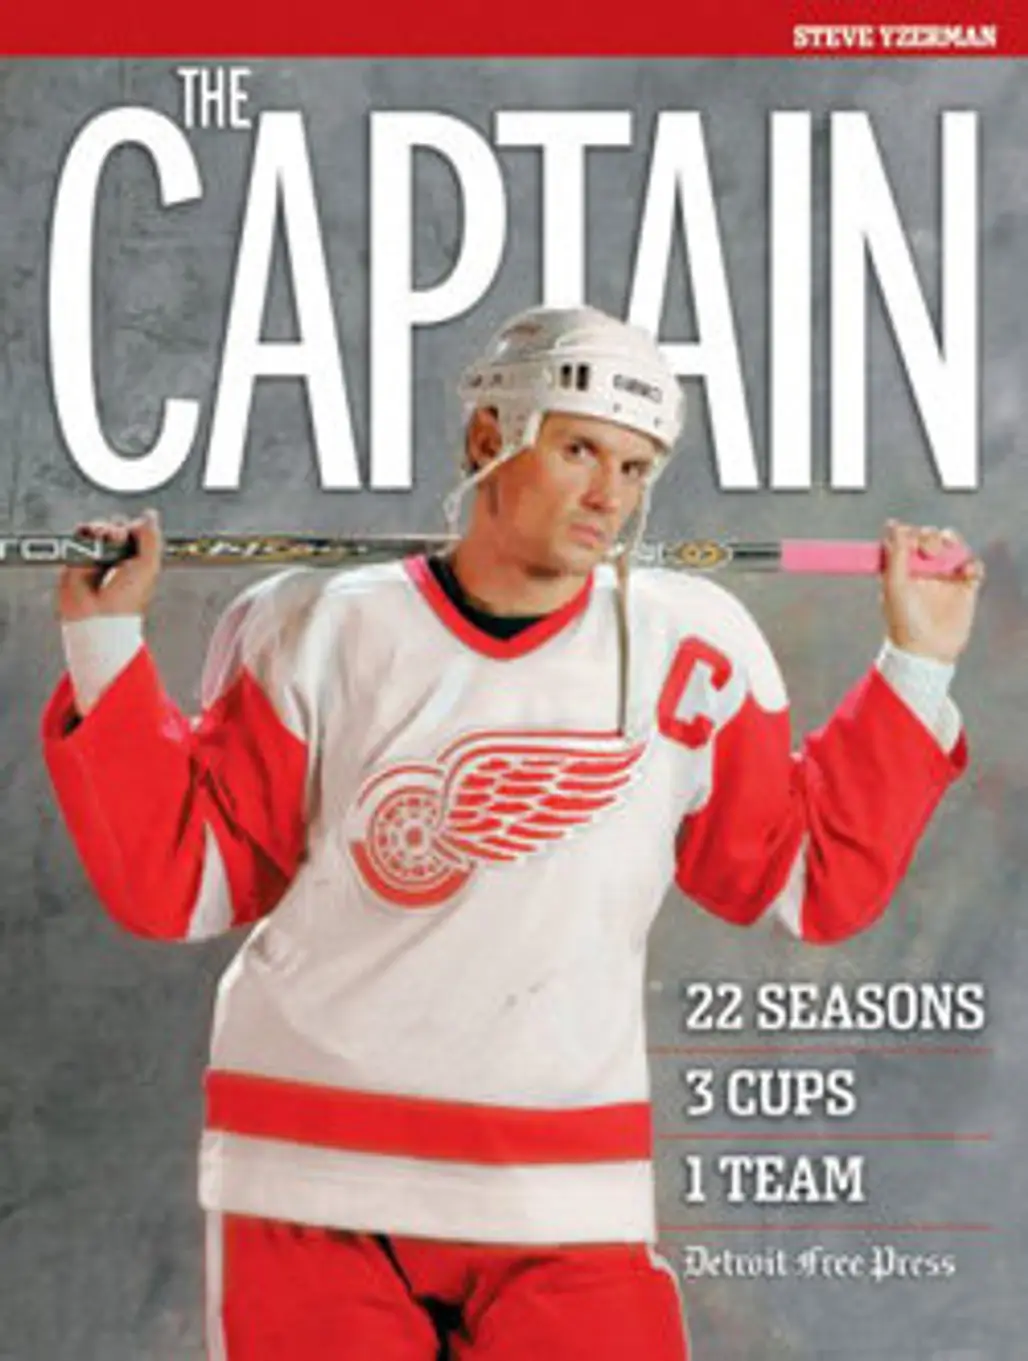 The Captain: Steve Yzerman: 22 Seasons, 3 Cups, 1 Team by Detroit Free Press